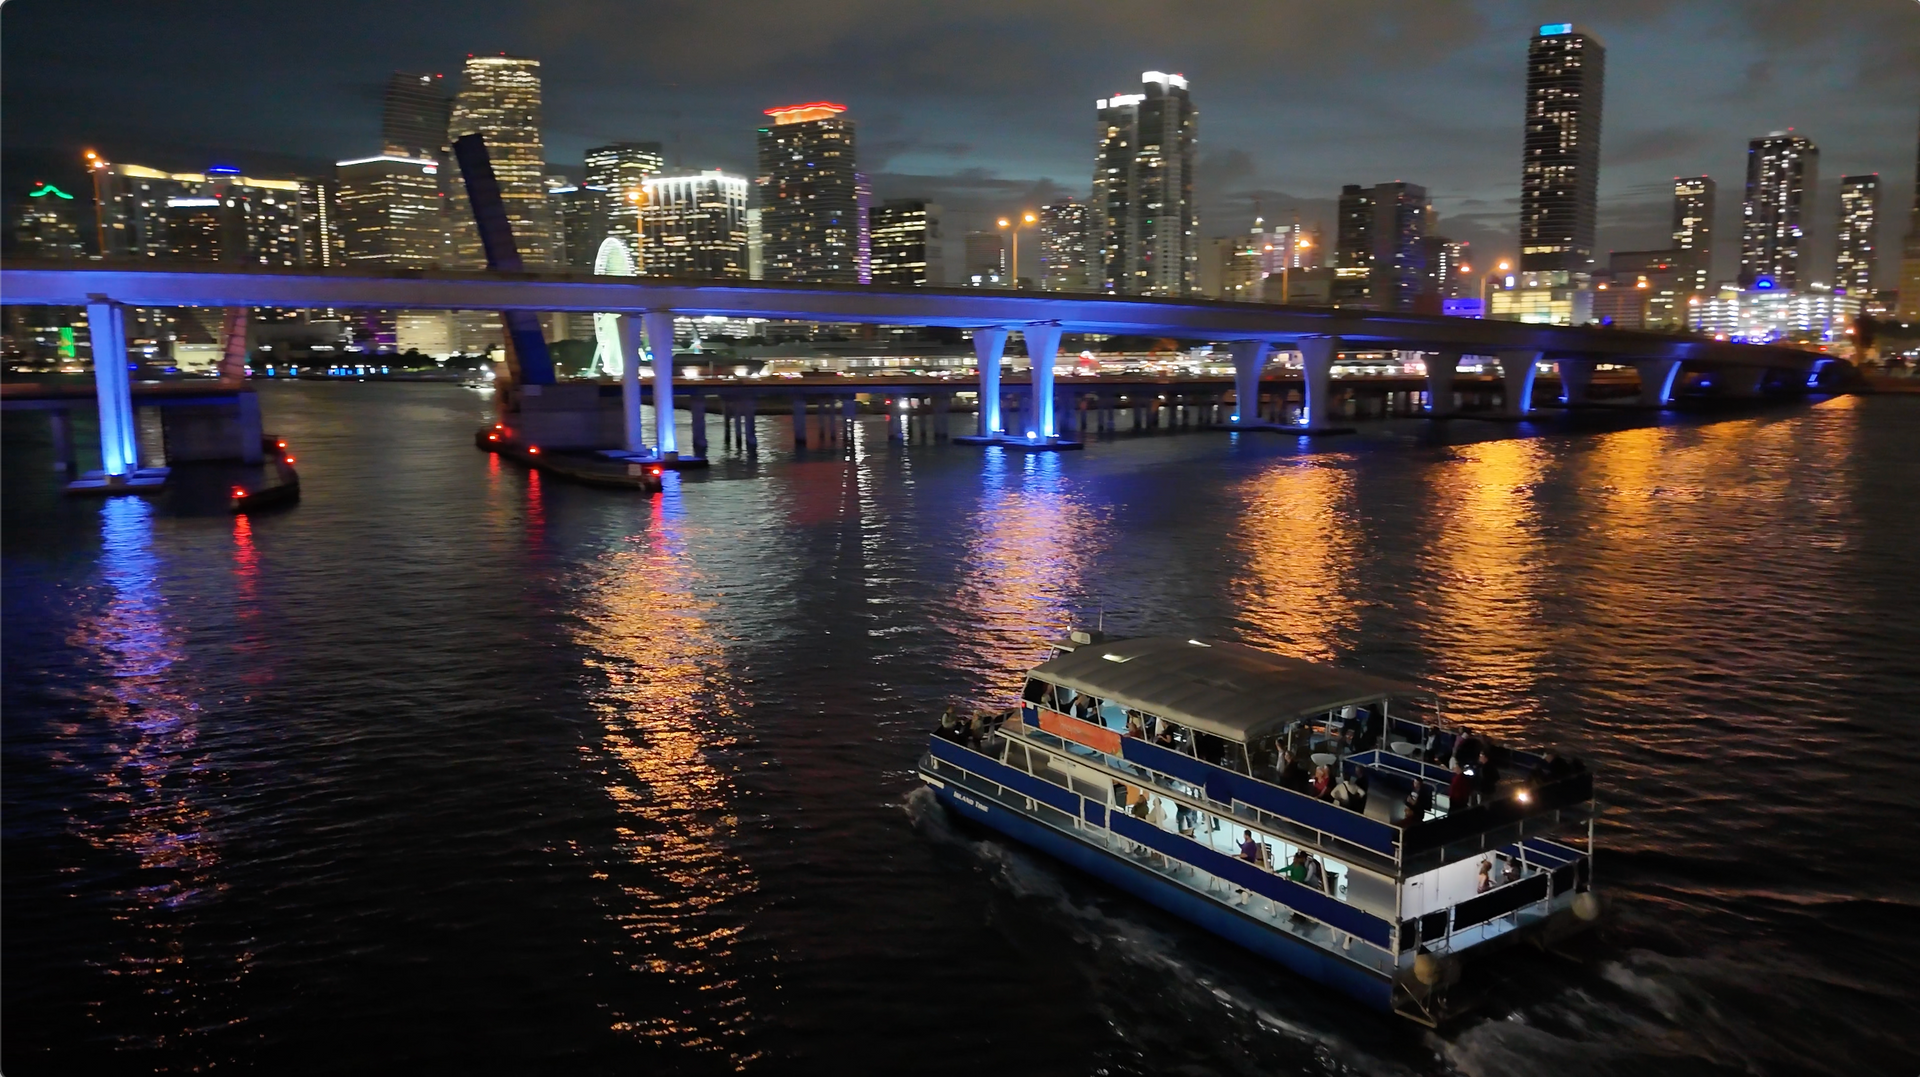 Miami Boat Cruise at Night